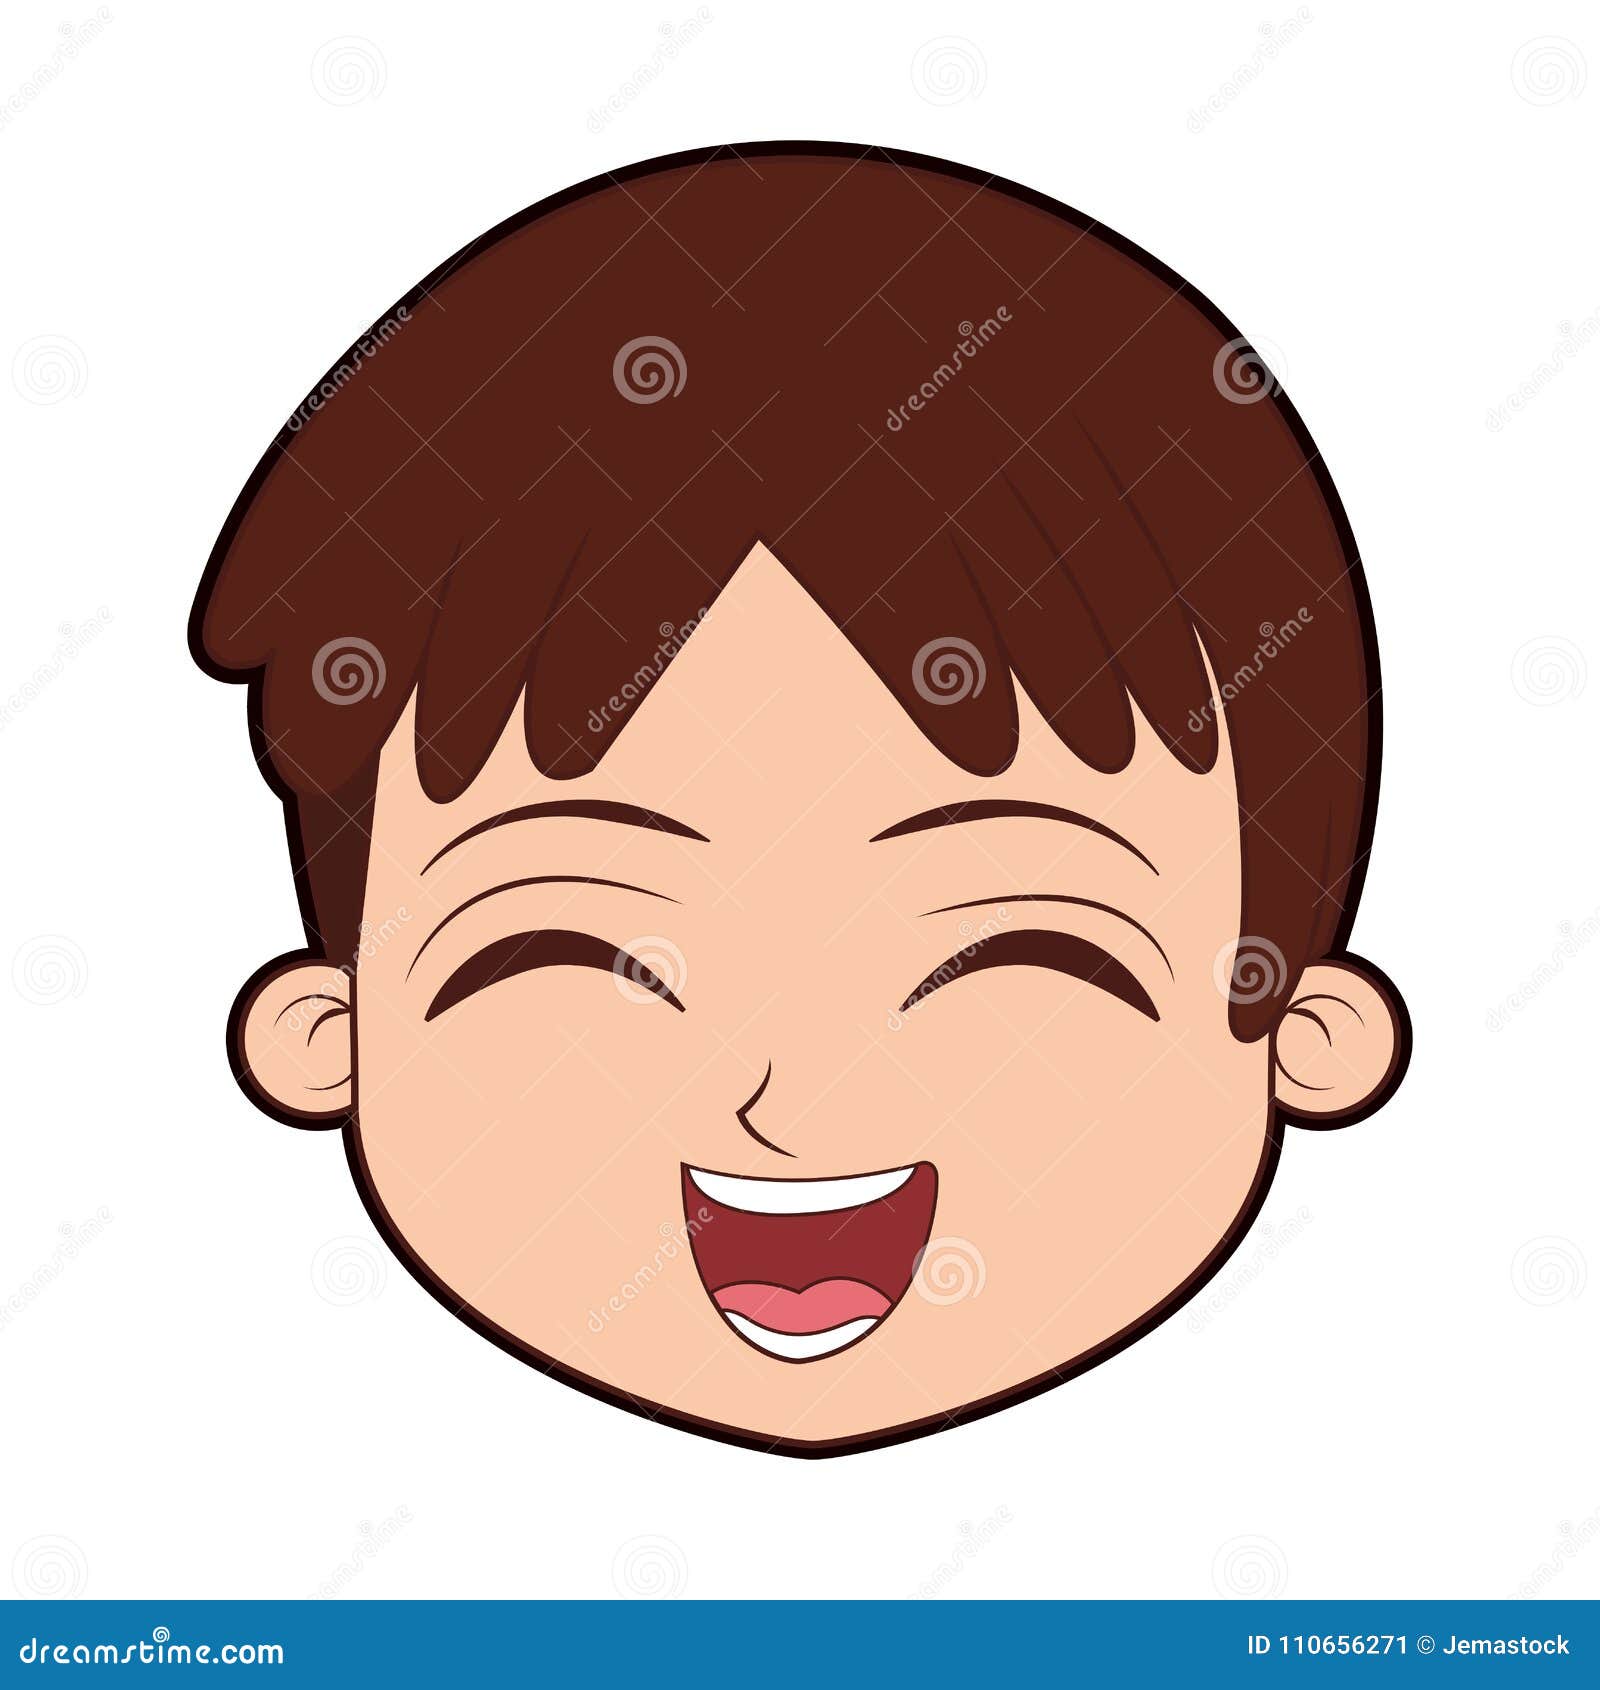 Cute boy face cartoon stock vector. Illustration of children - 110656271